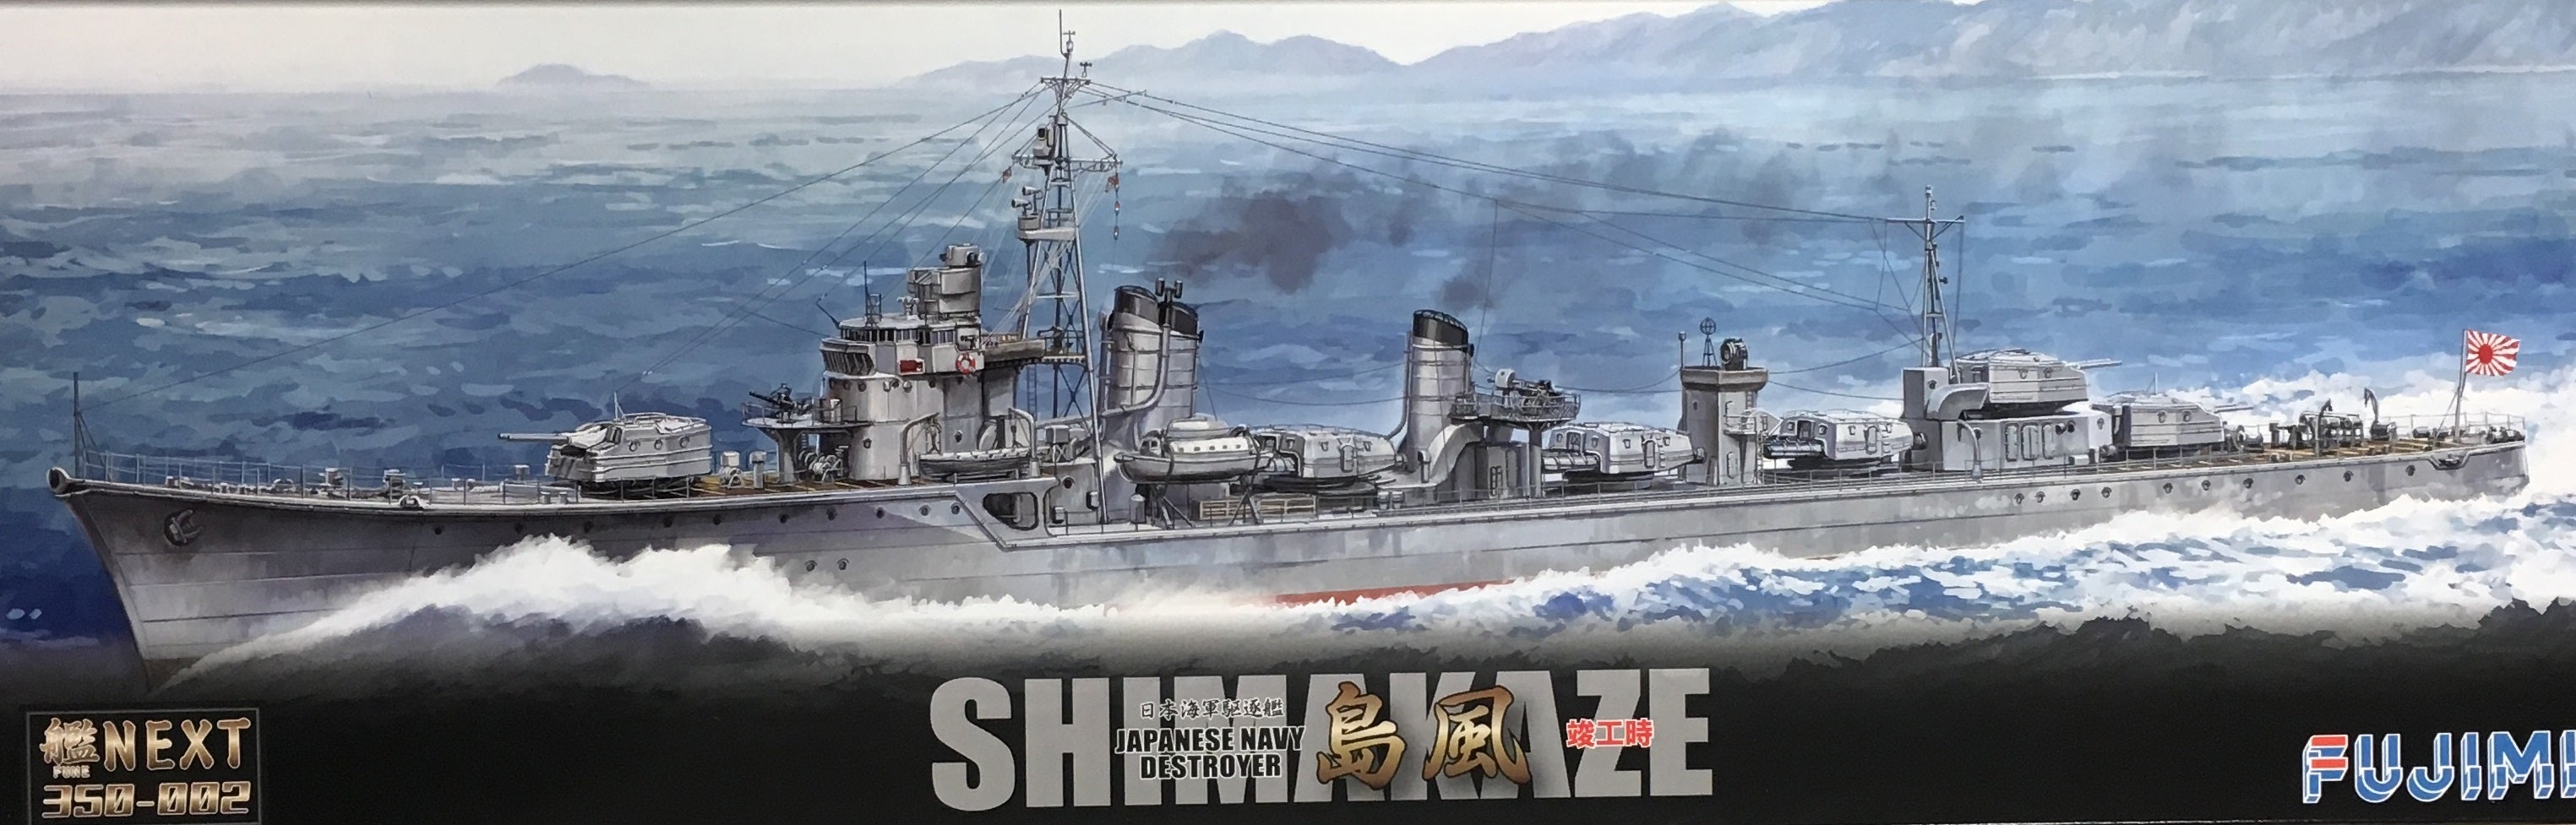 IJN Destroyer Shimakaze (Early Version)